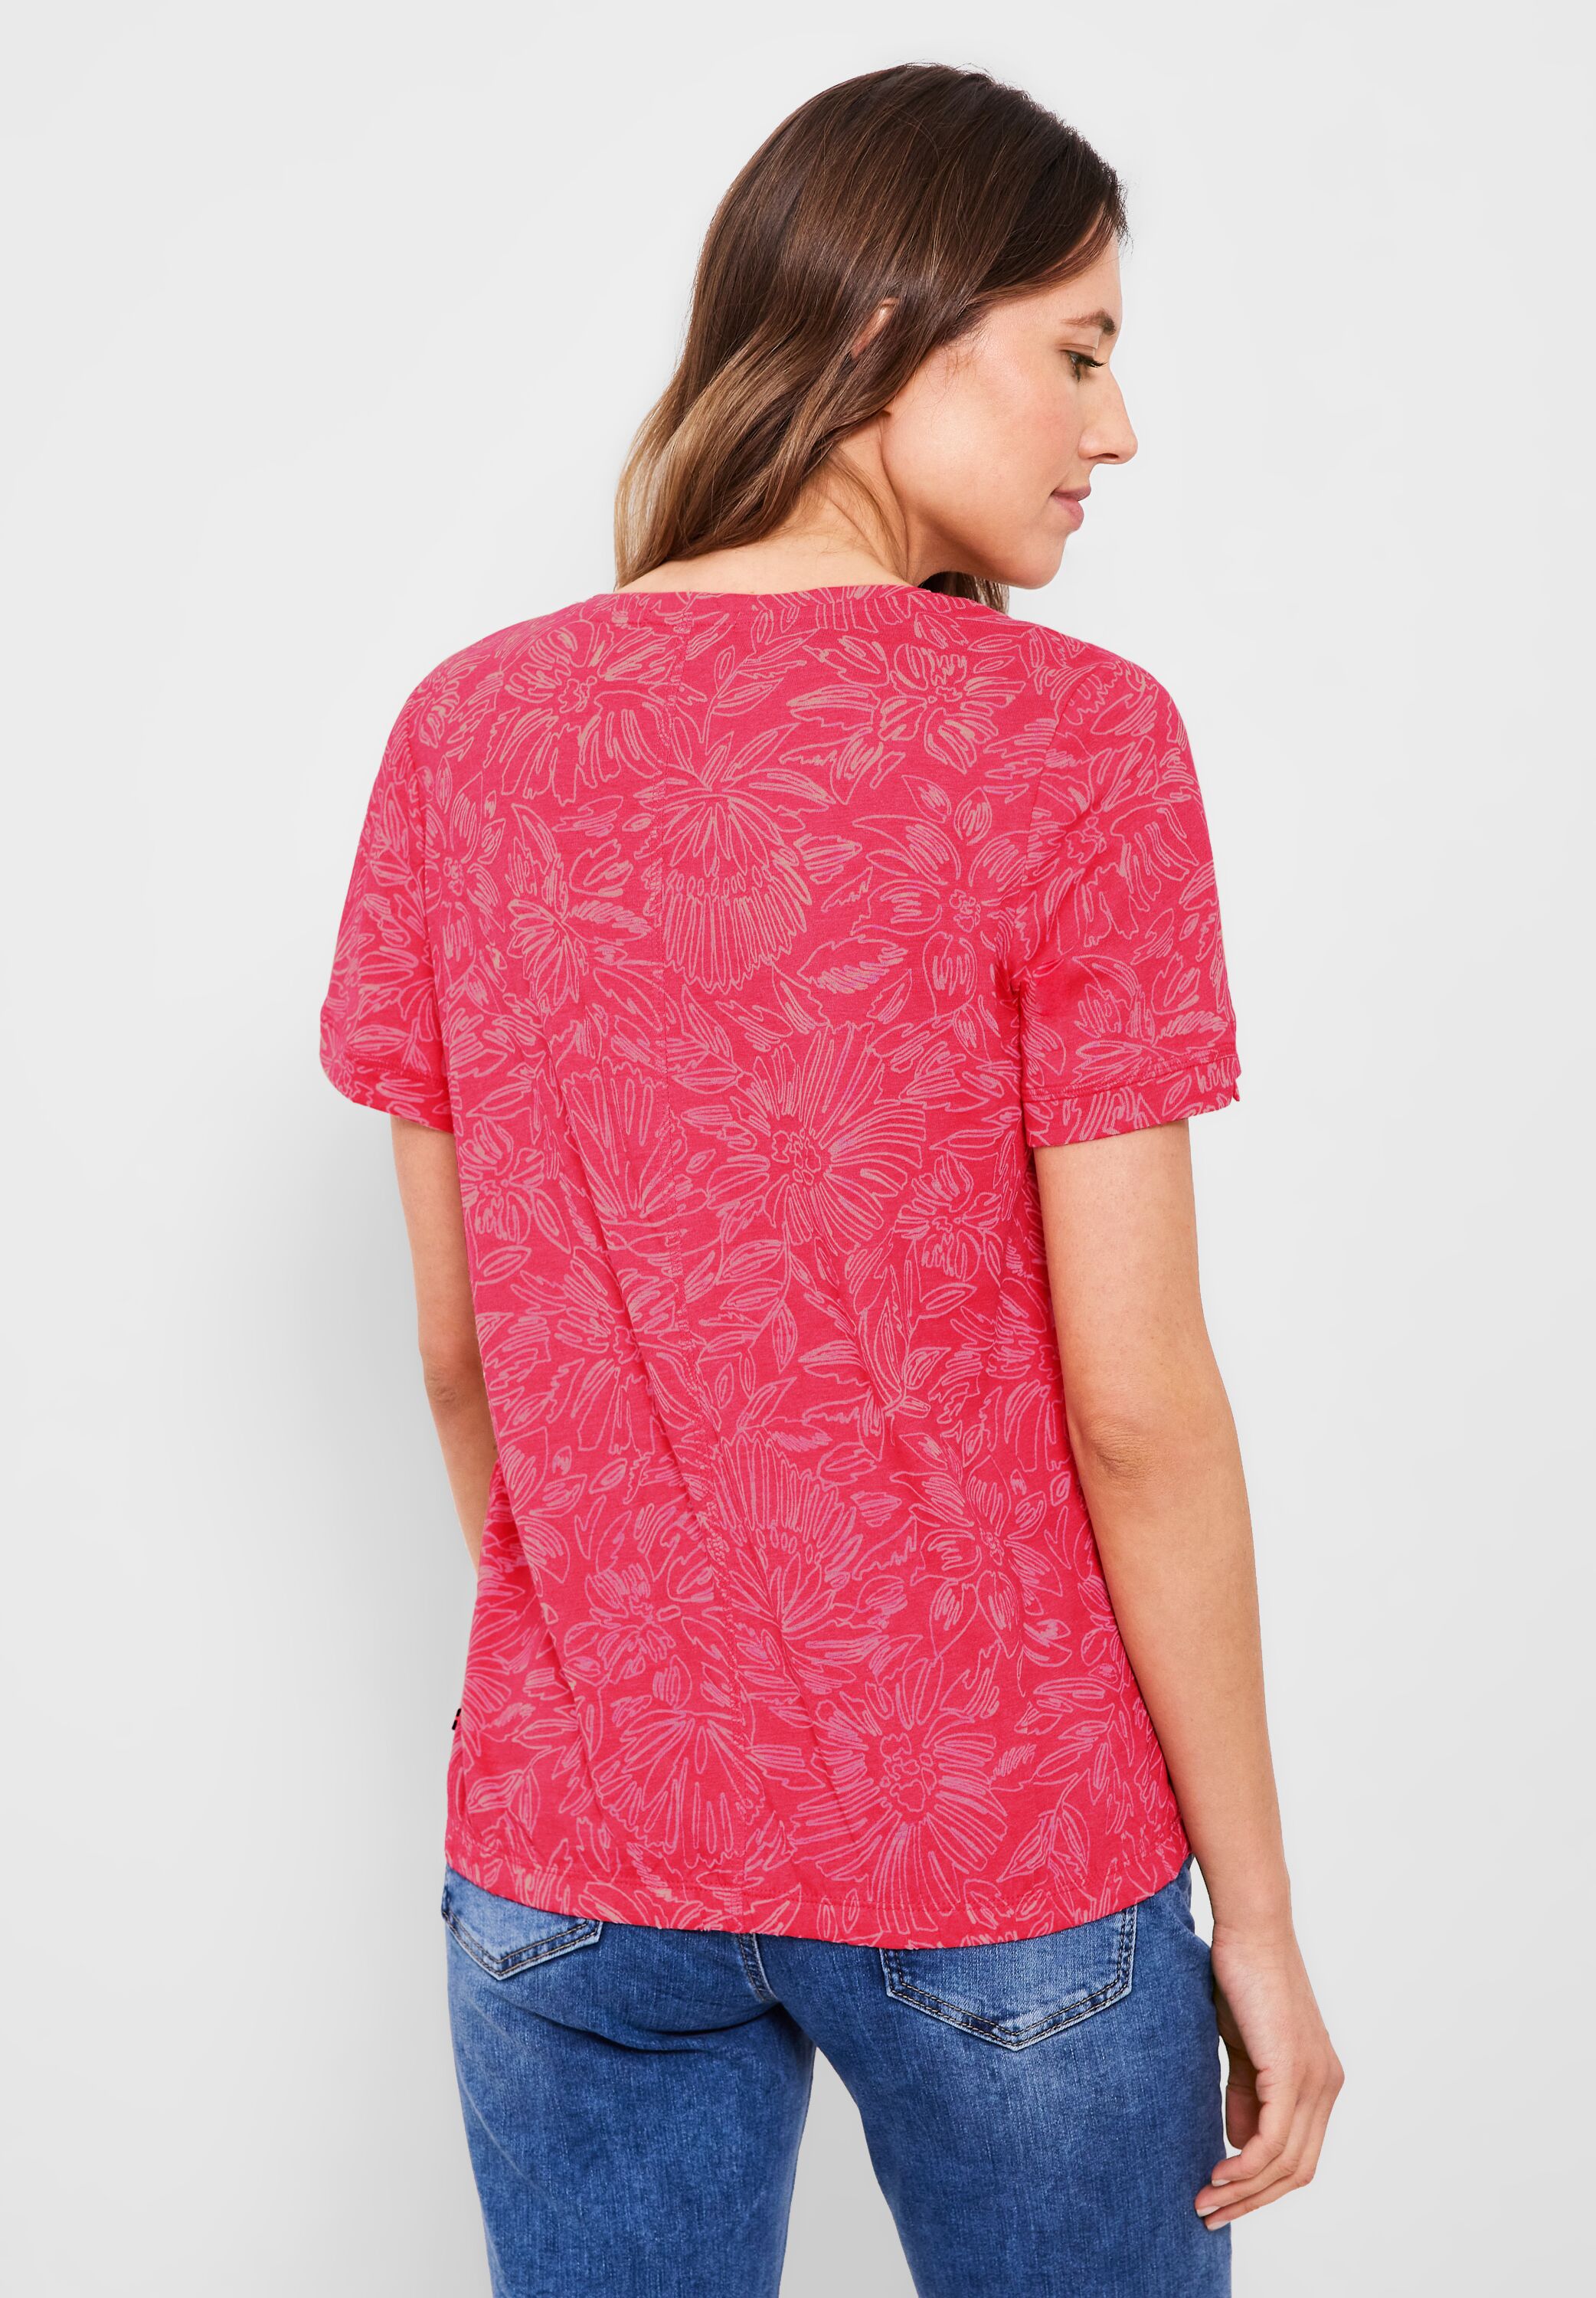 - T-Shirt in Strawberry CONCEPT B319600-24472 Mode im Red SALE reduziert CECIL